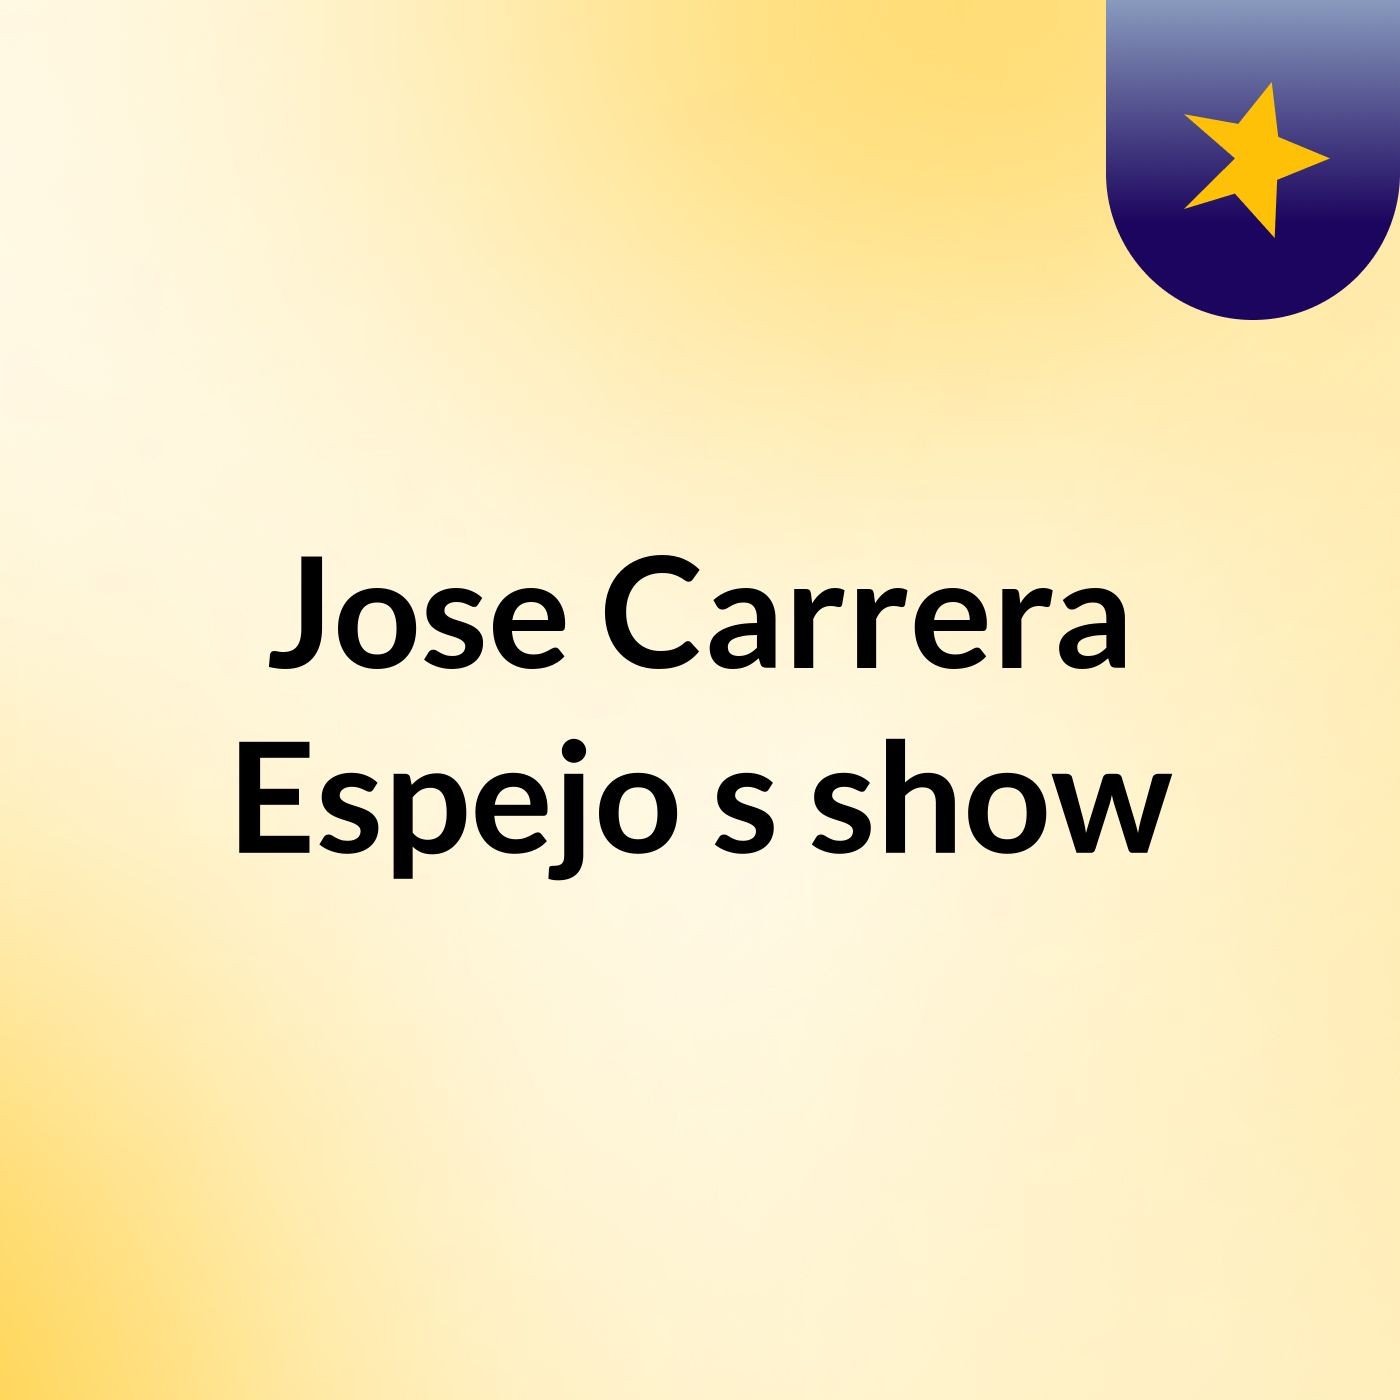 Jose Carrera Espejo's show